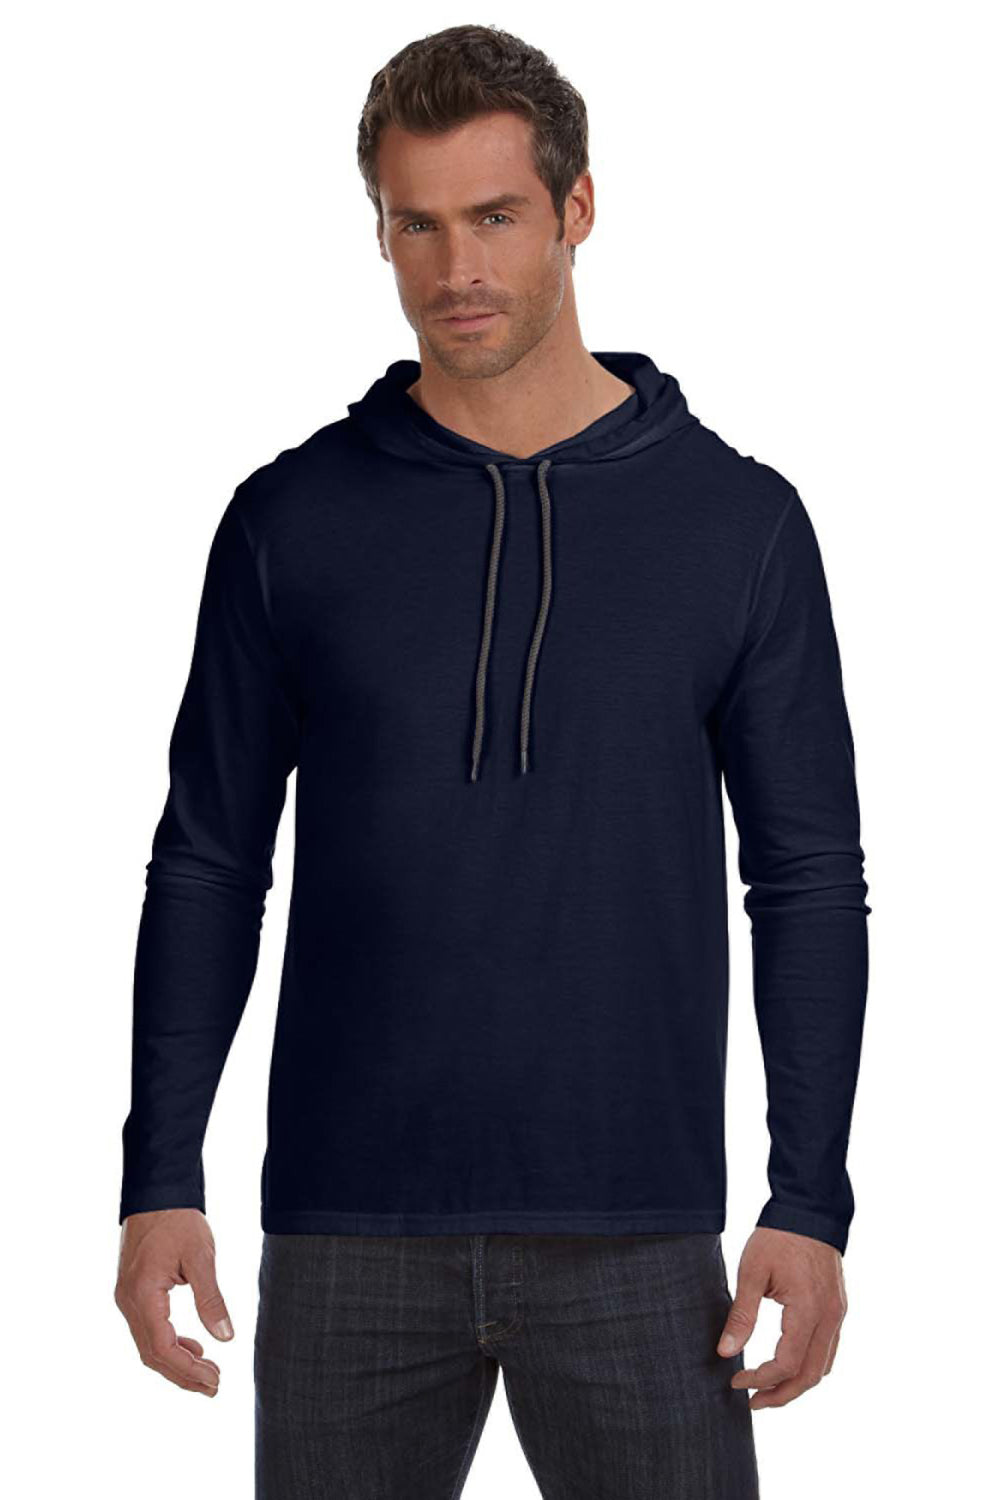 Anvil 987AN Mens Long Sleeve Hooded T-Shirt Hoodie Navy Blue/Dark Grey Front